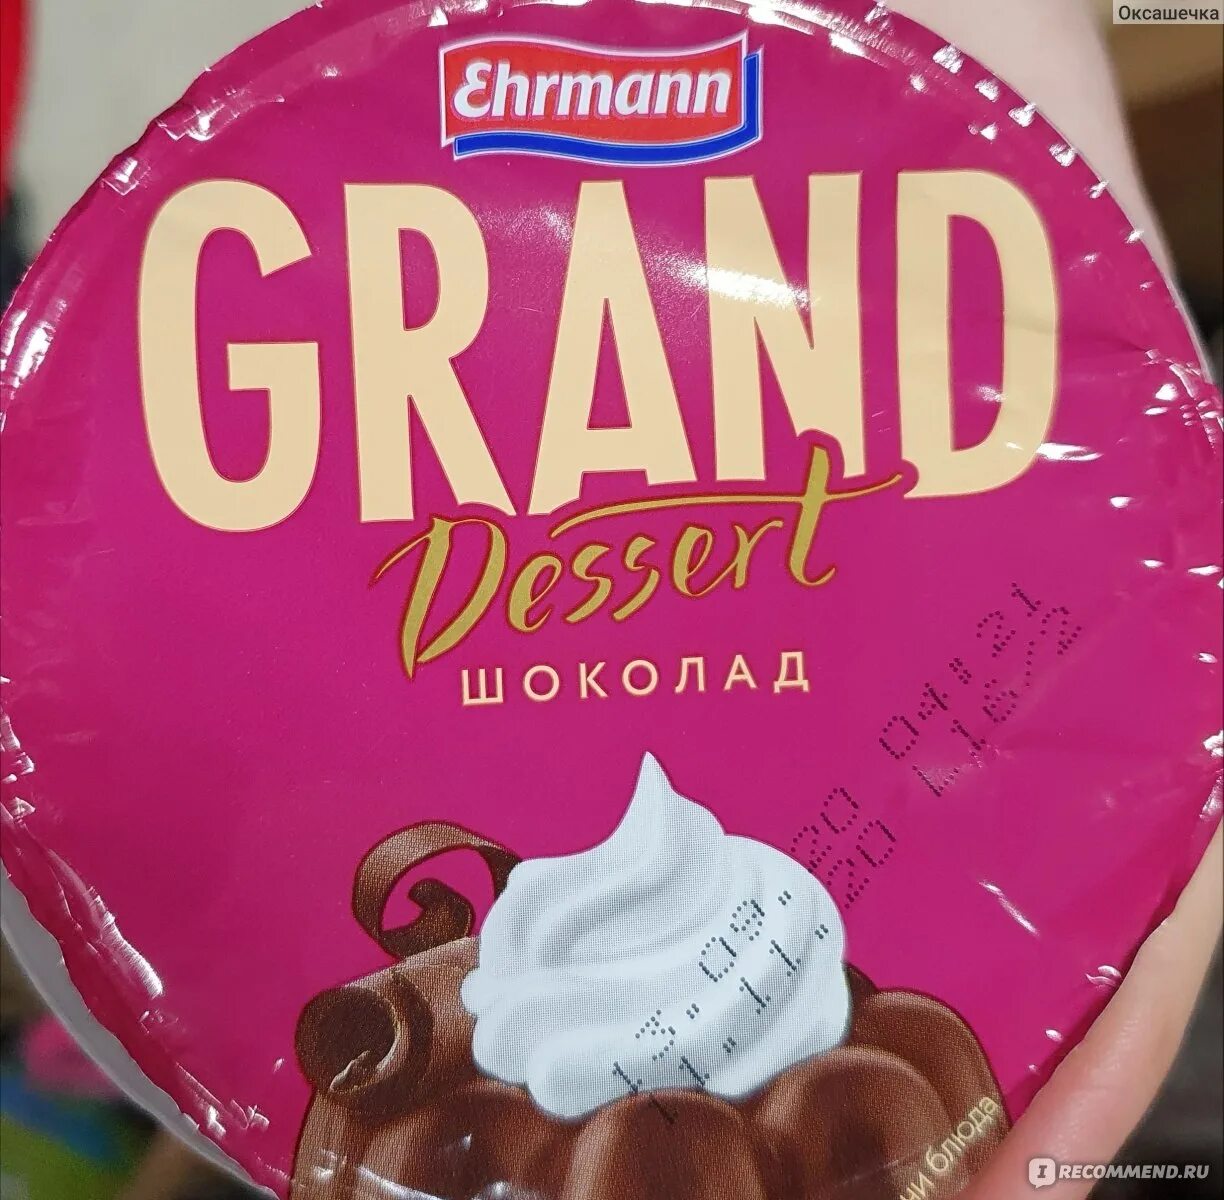 Шоколад grand. Пудинг Ehrmann Grand. Десерт Эрманн Гранд шоколад. Пудинг шоколадный Ehrmann Grand. Эрман пудинг Гранд десерт шоколадный.